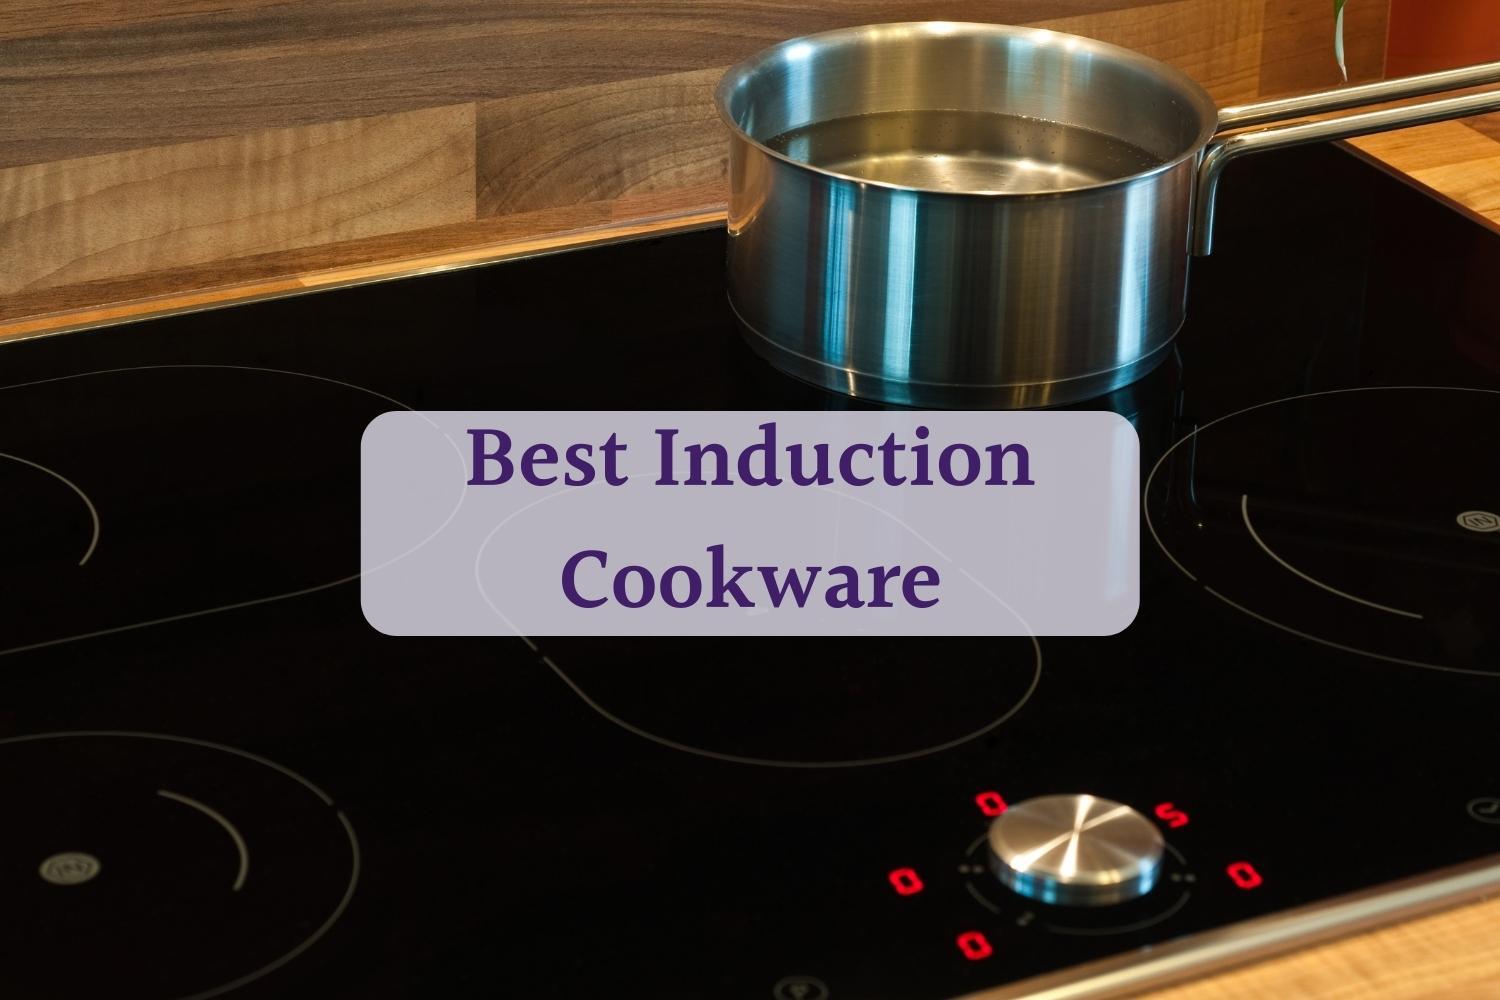 https://clankitchen.com/wp-content/uploads/2020/06/induction-cookware.jpg